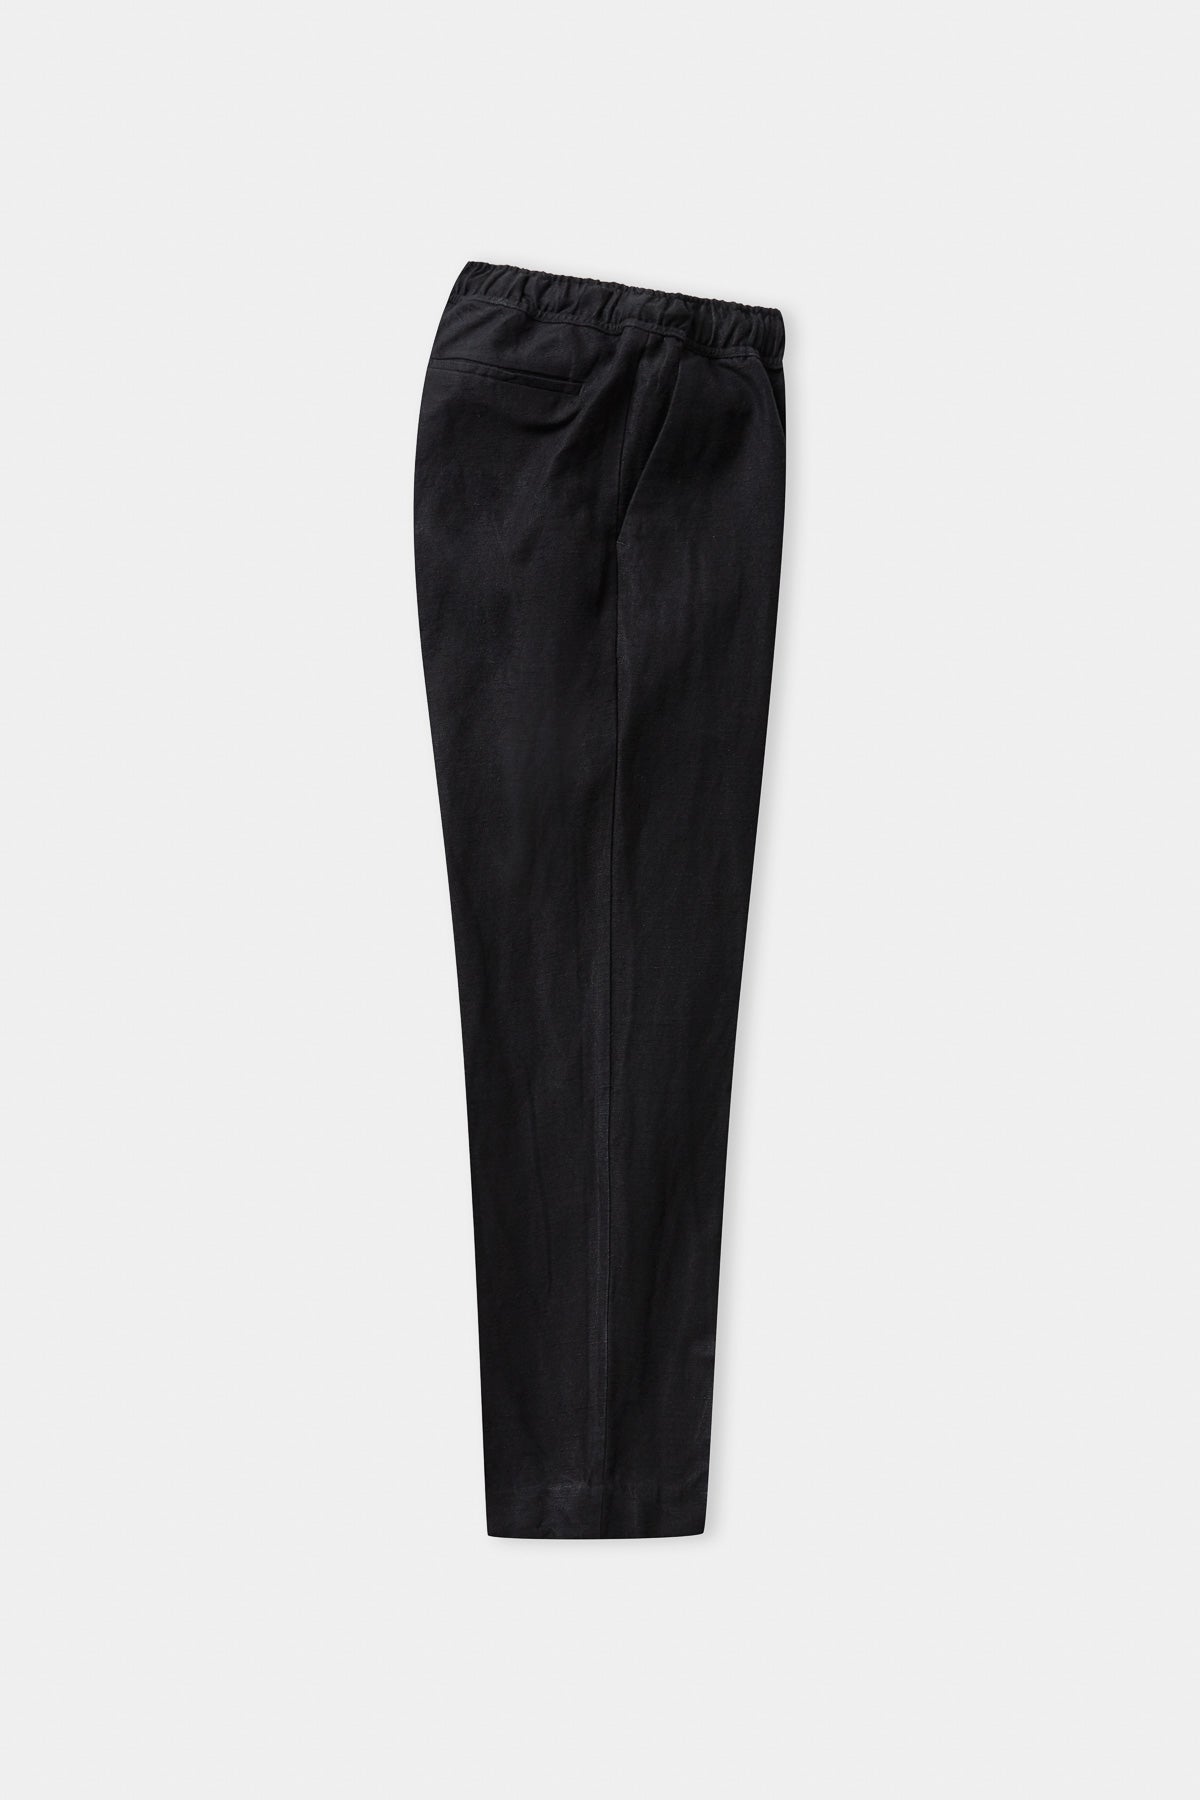 MAX trousers black winter linen